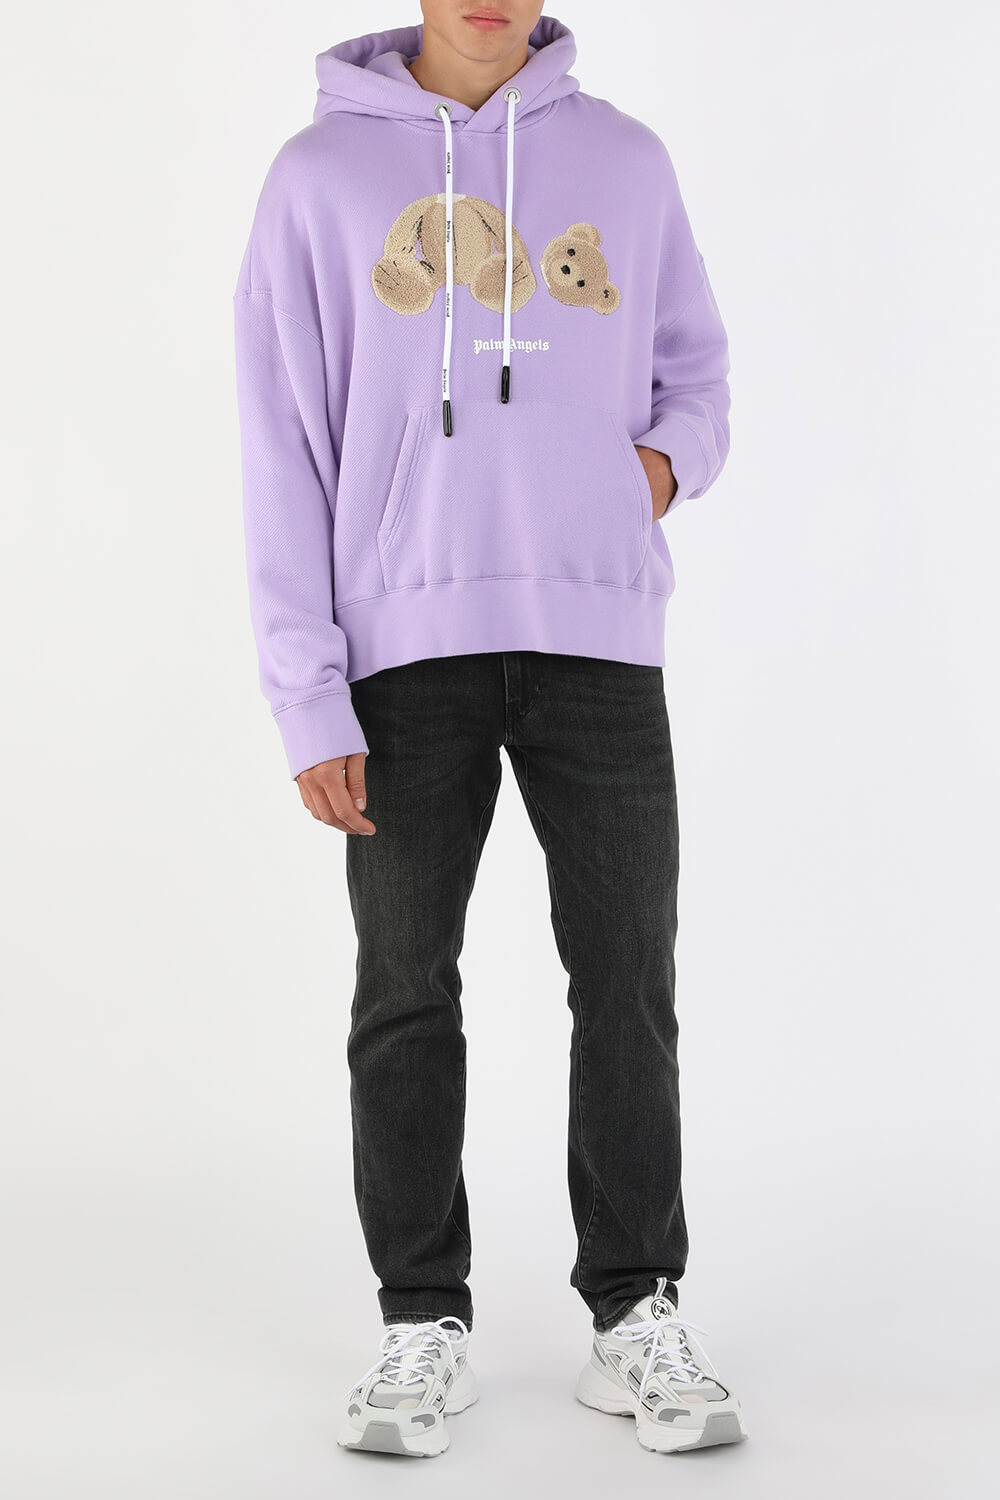 Bear Print Sweatshirt in Purple PALM ANGELS